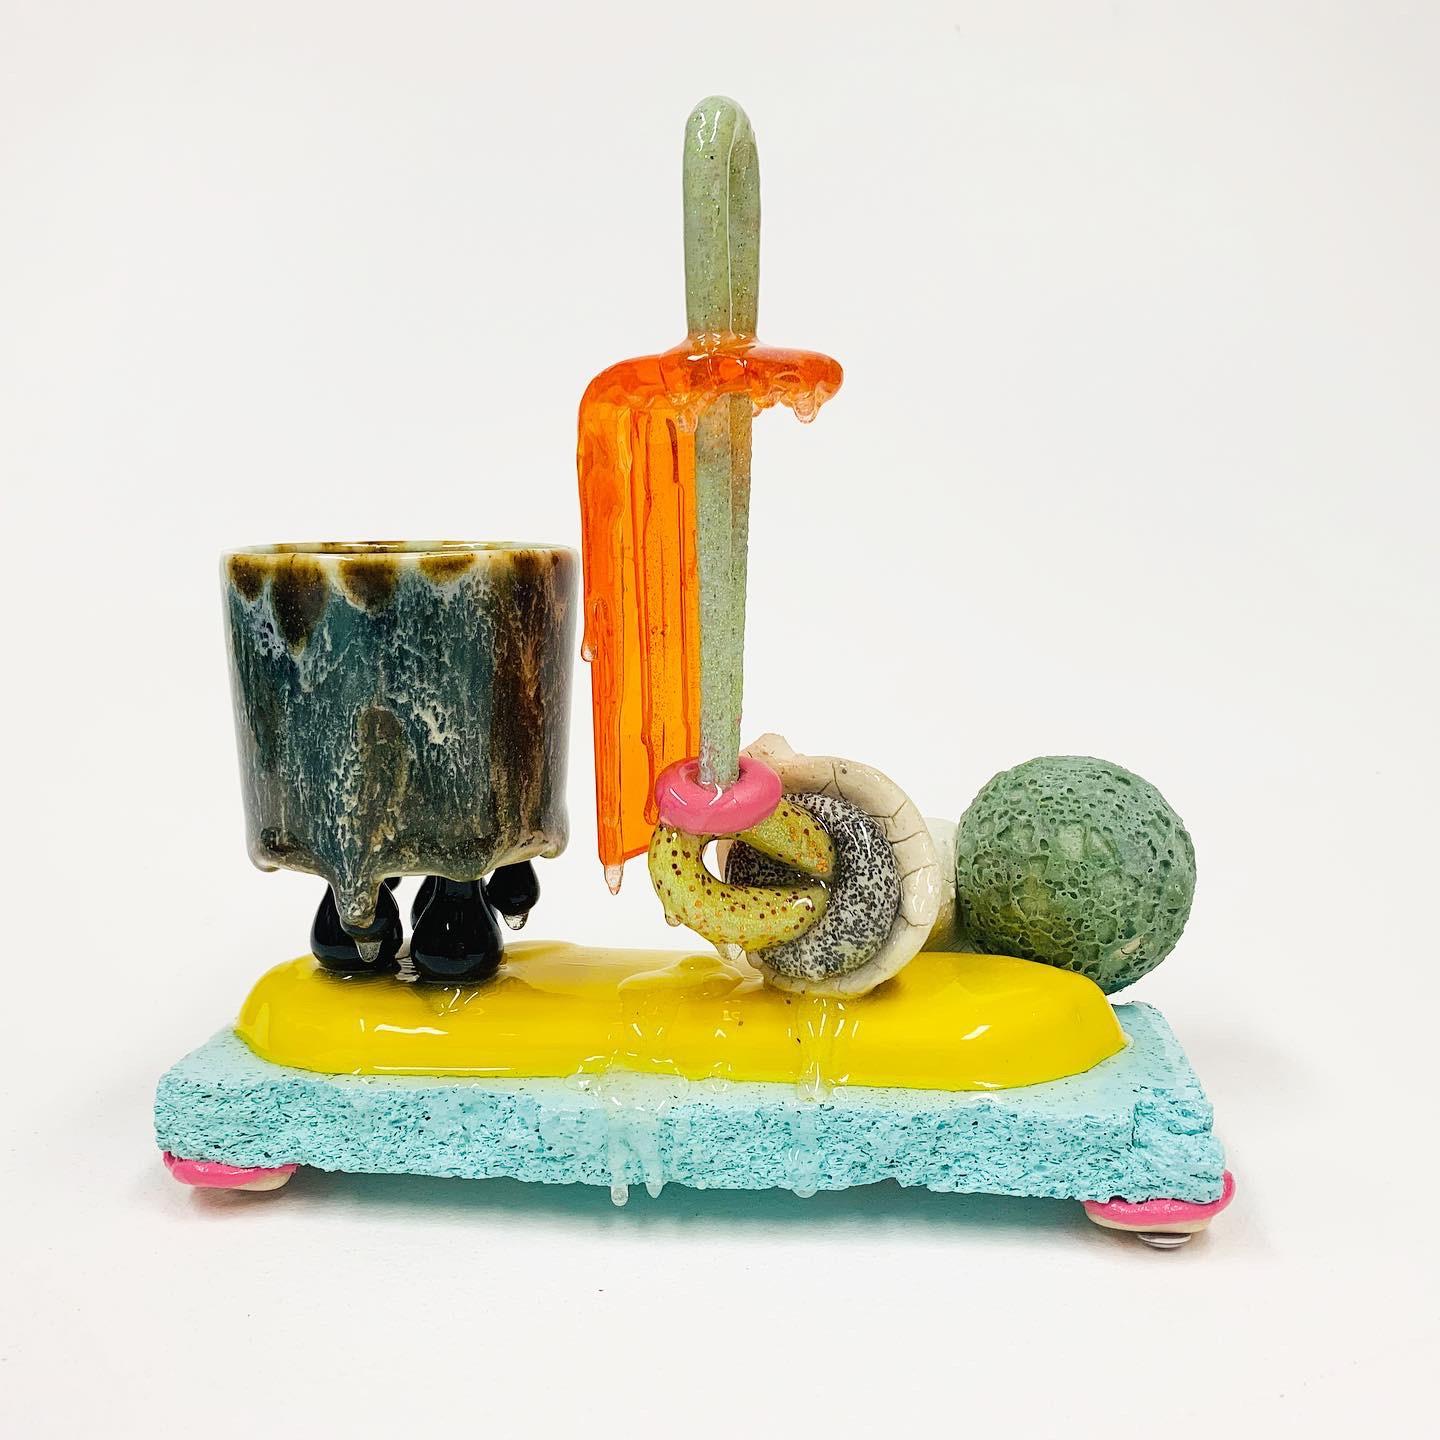 "Mug Composition #79", Contemporary, Mixed Media, Ceramic, Sculpture, Glaze - Mixed Media Art by Matt Mitros